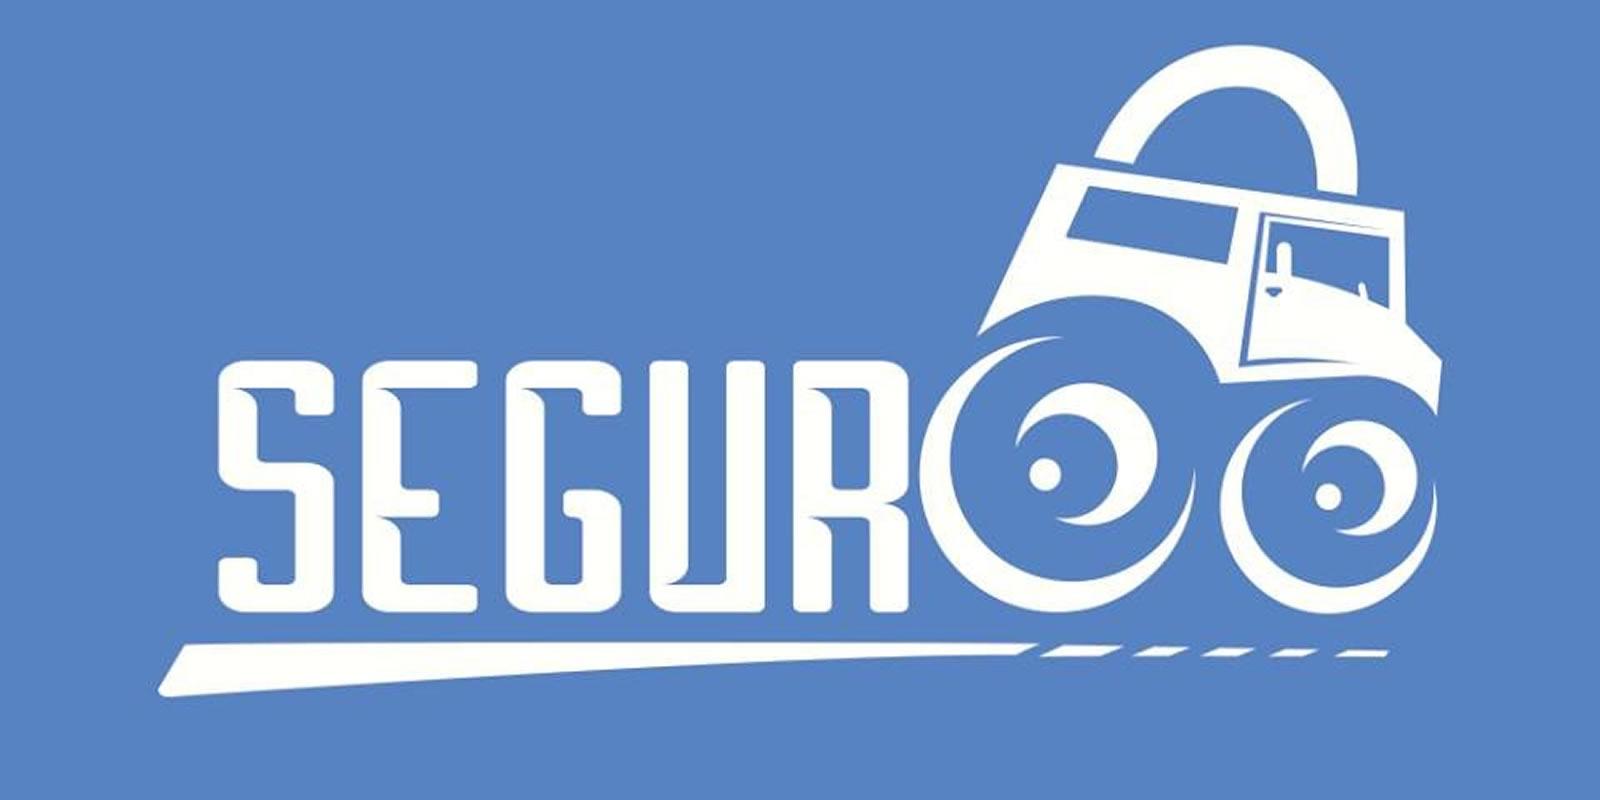 Logotipo Seguroo